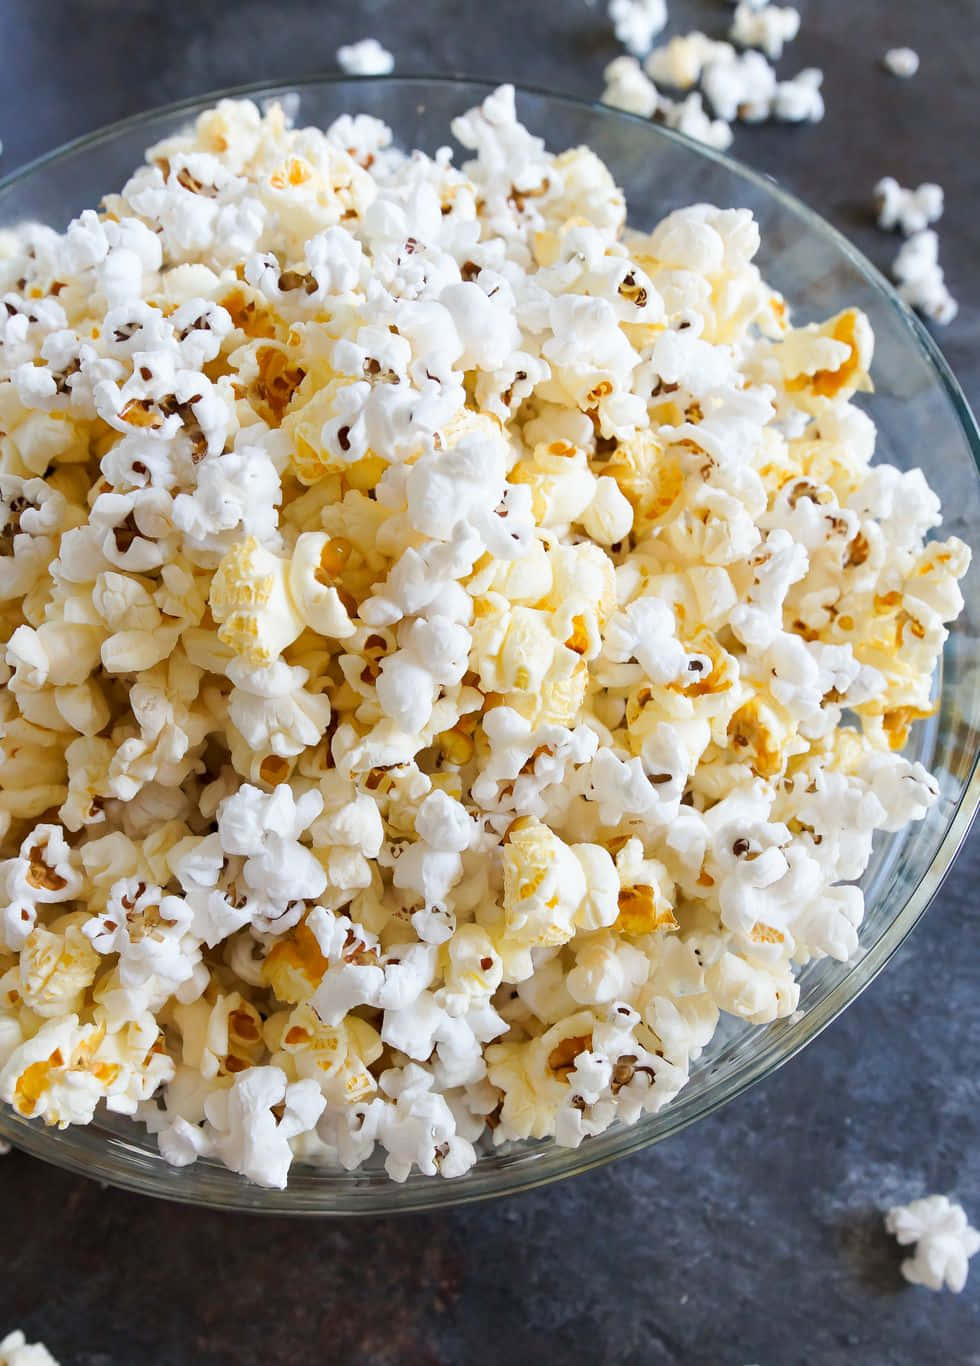 Unaciotola Di Popcorn Con Una Ciotola Di Popcorn